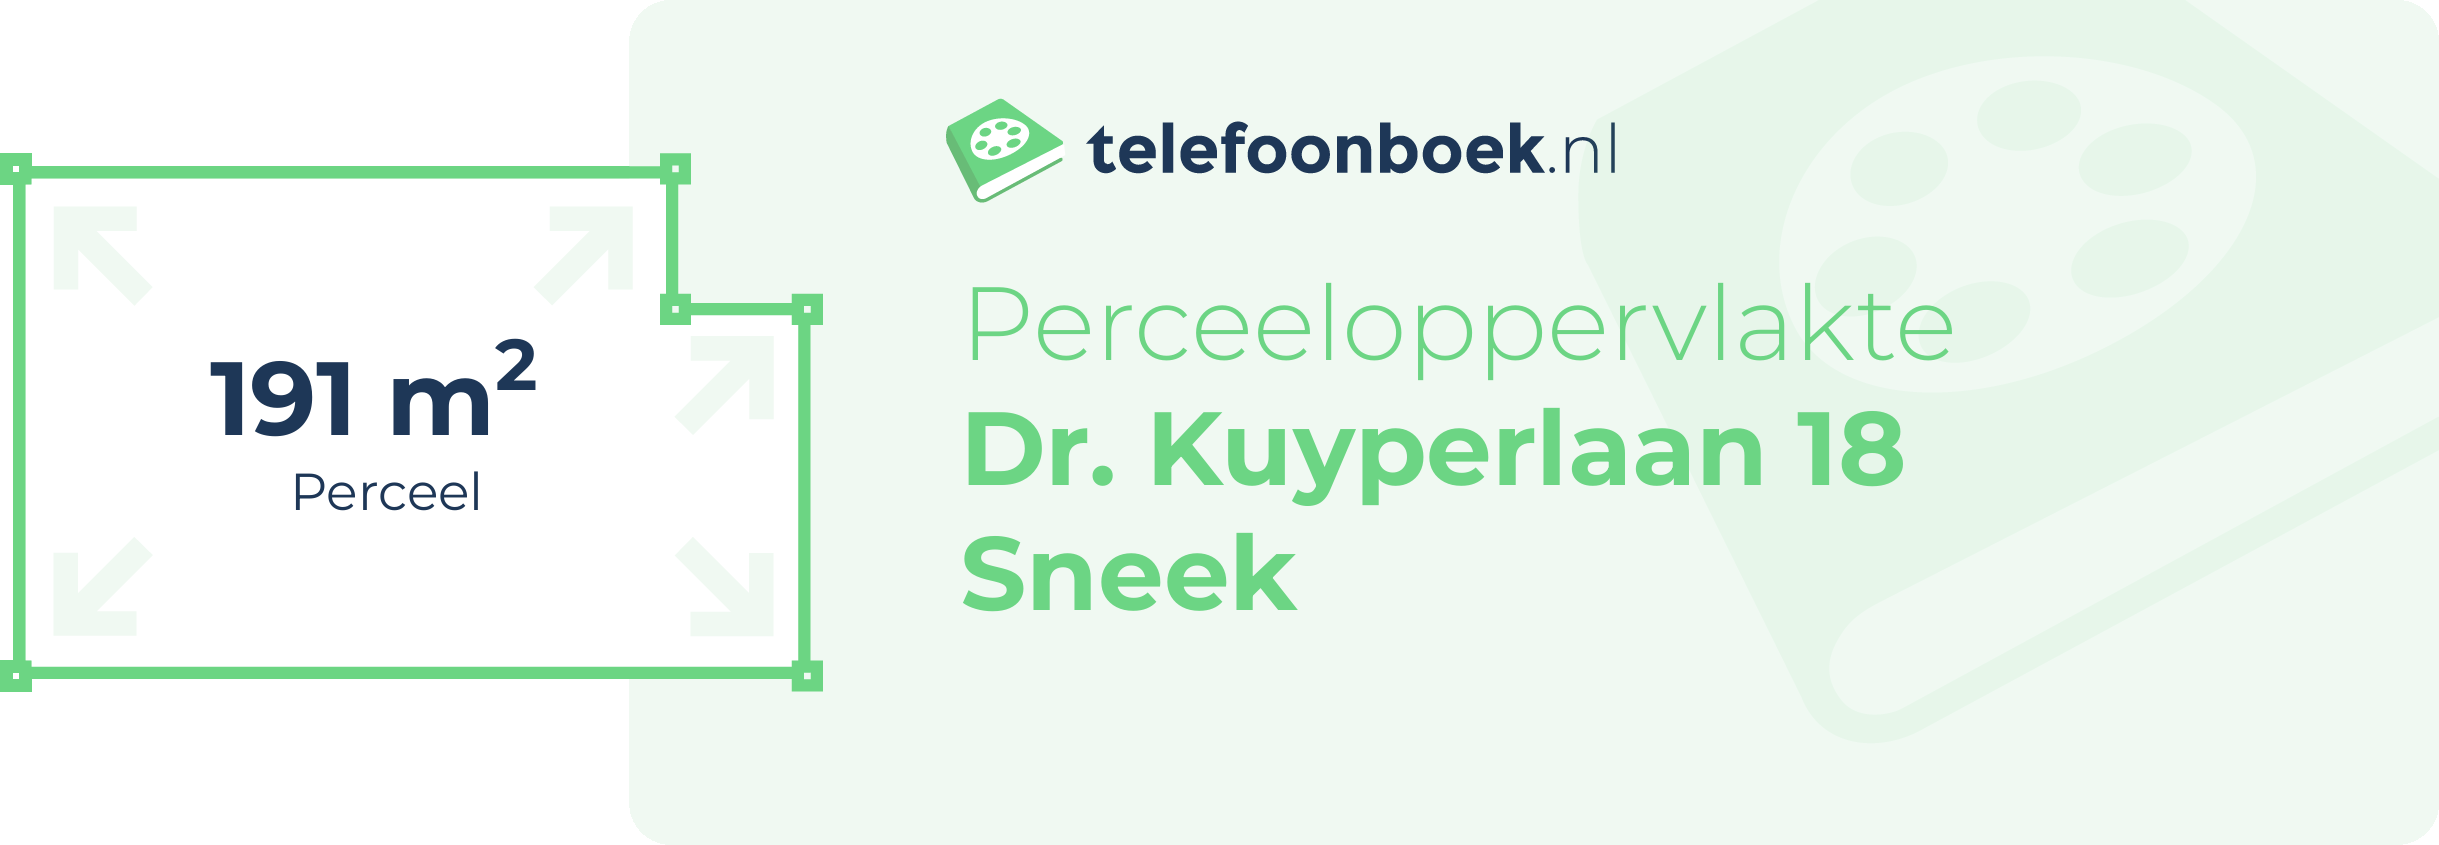 Perceeloppervlakte Dr. Kuyperlaan 18 Sneek